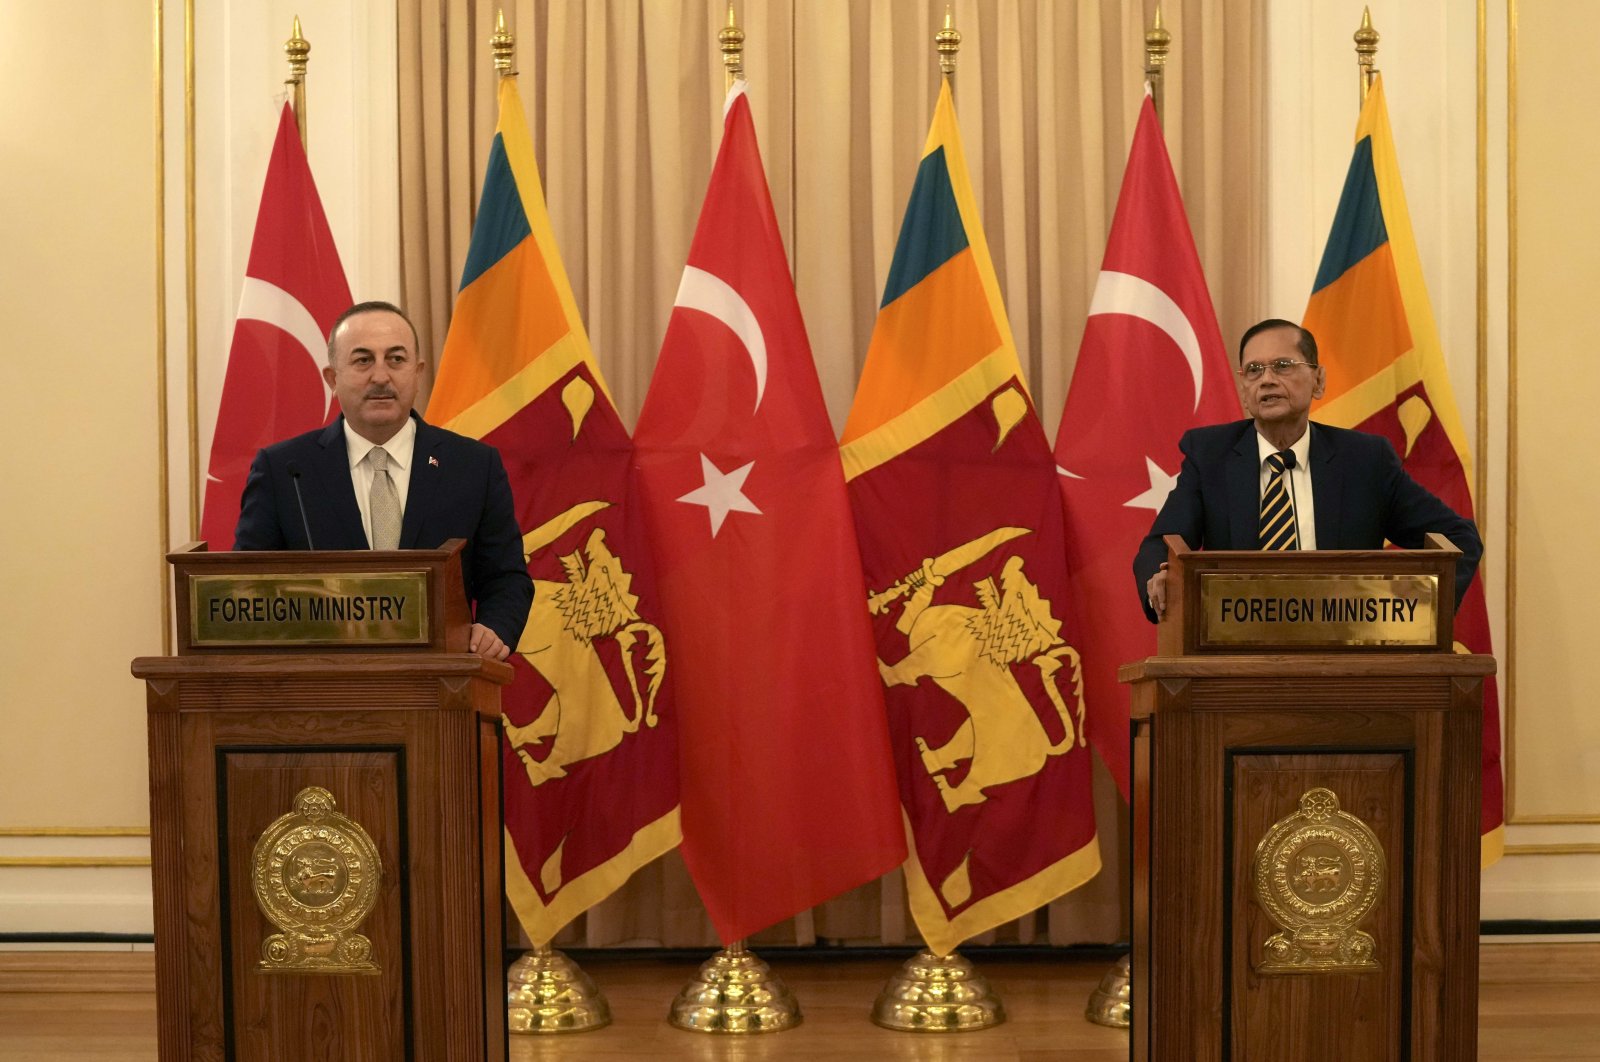 Foreign Minister Mevlüt Çavuşoğlu (L) addresses media as his Sri Lankan counterpart Gamini Lakshman Peiris watches in Colombo, Sri Lanka, Jan. 28, 2022. (AP Photo)